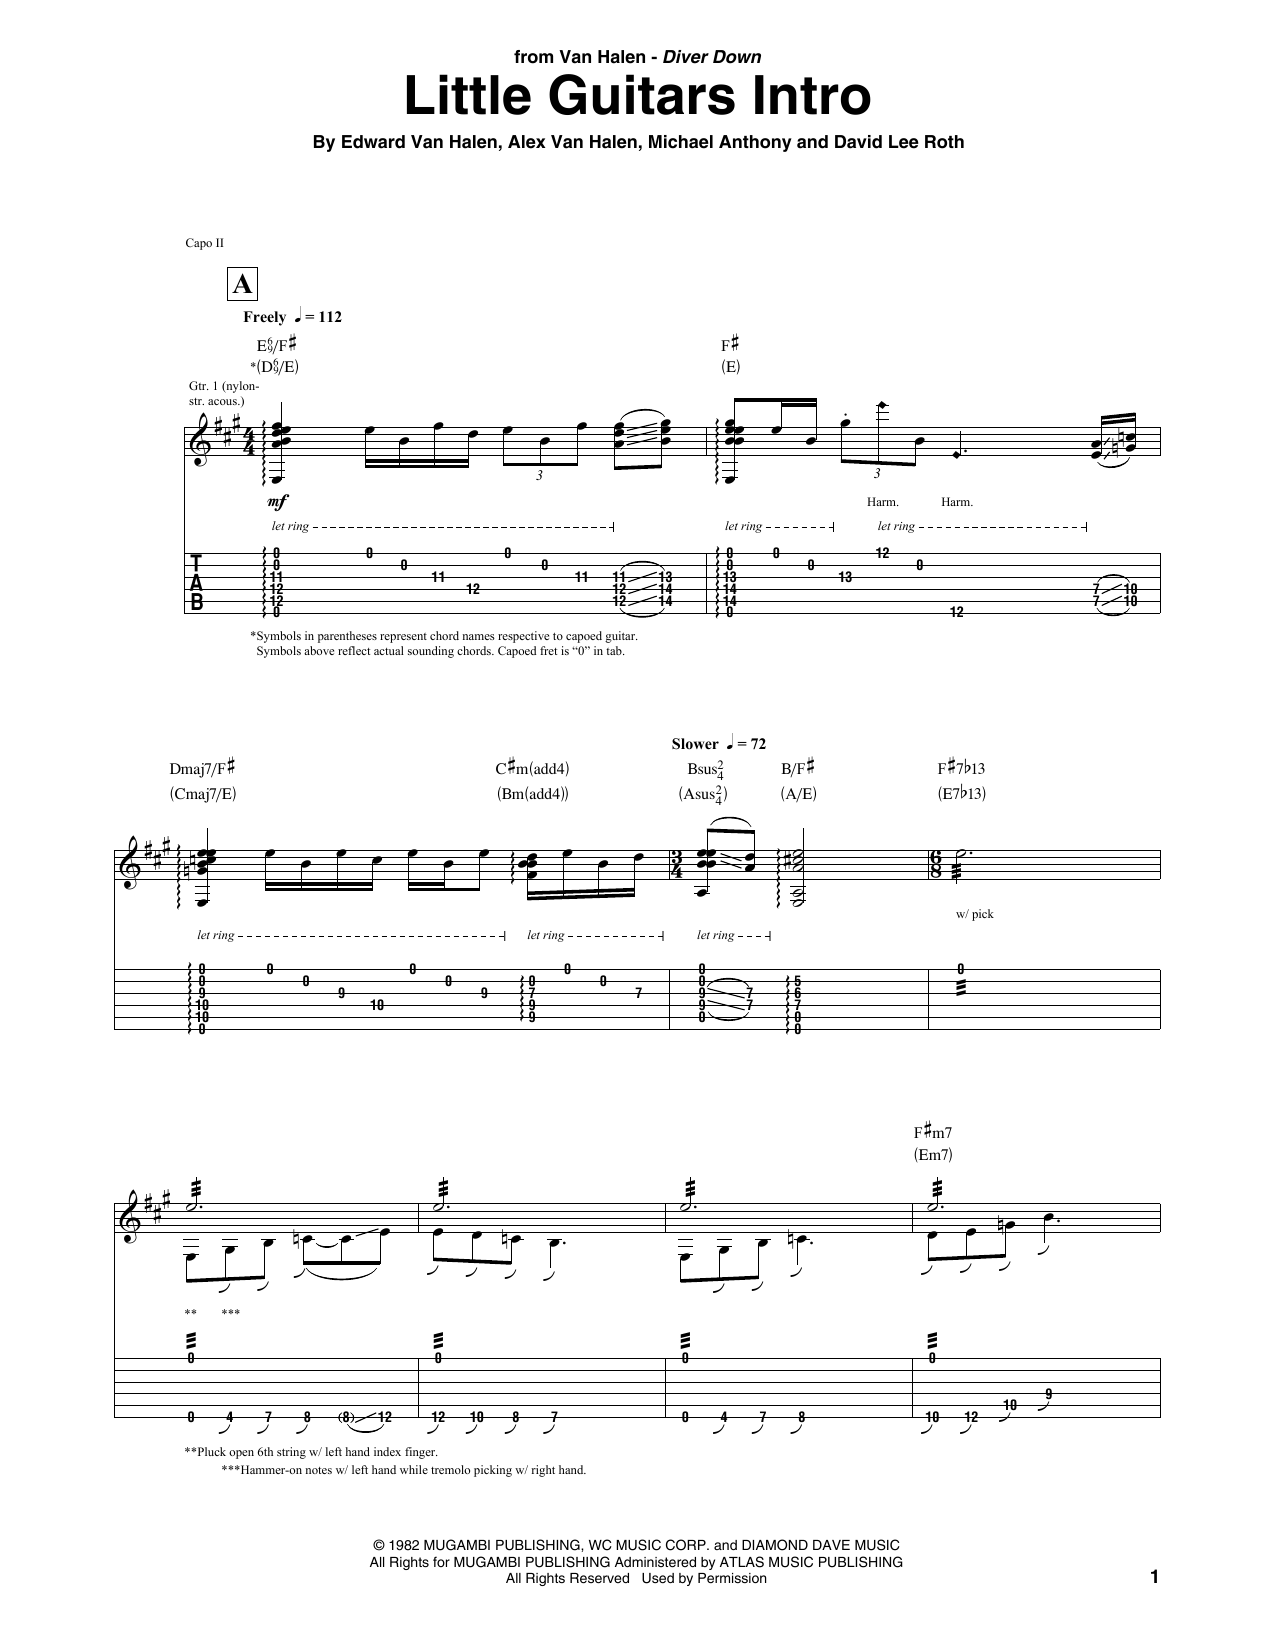 Van Halen Little Guitars Intro Sheet Music Notes & Chords for Guitar Tab - Download or Print PDF